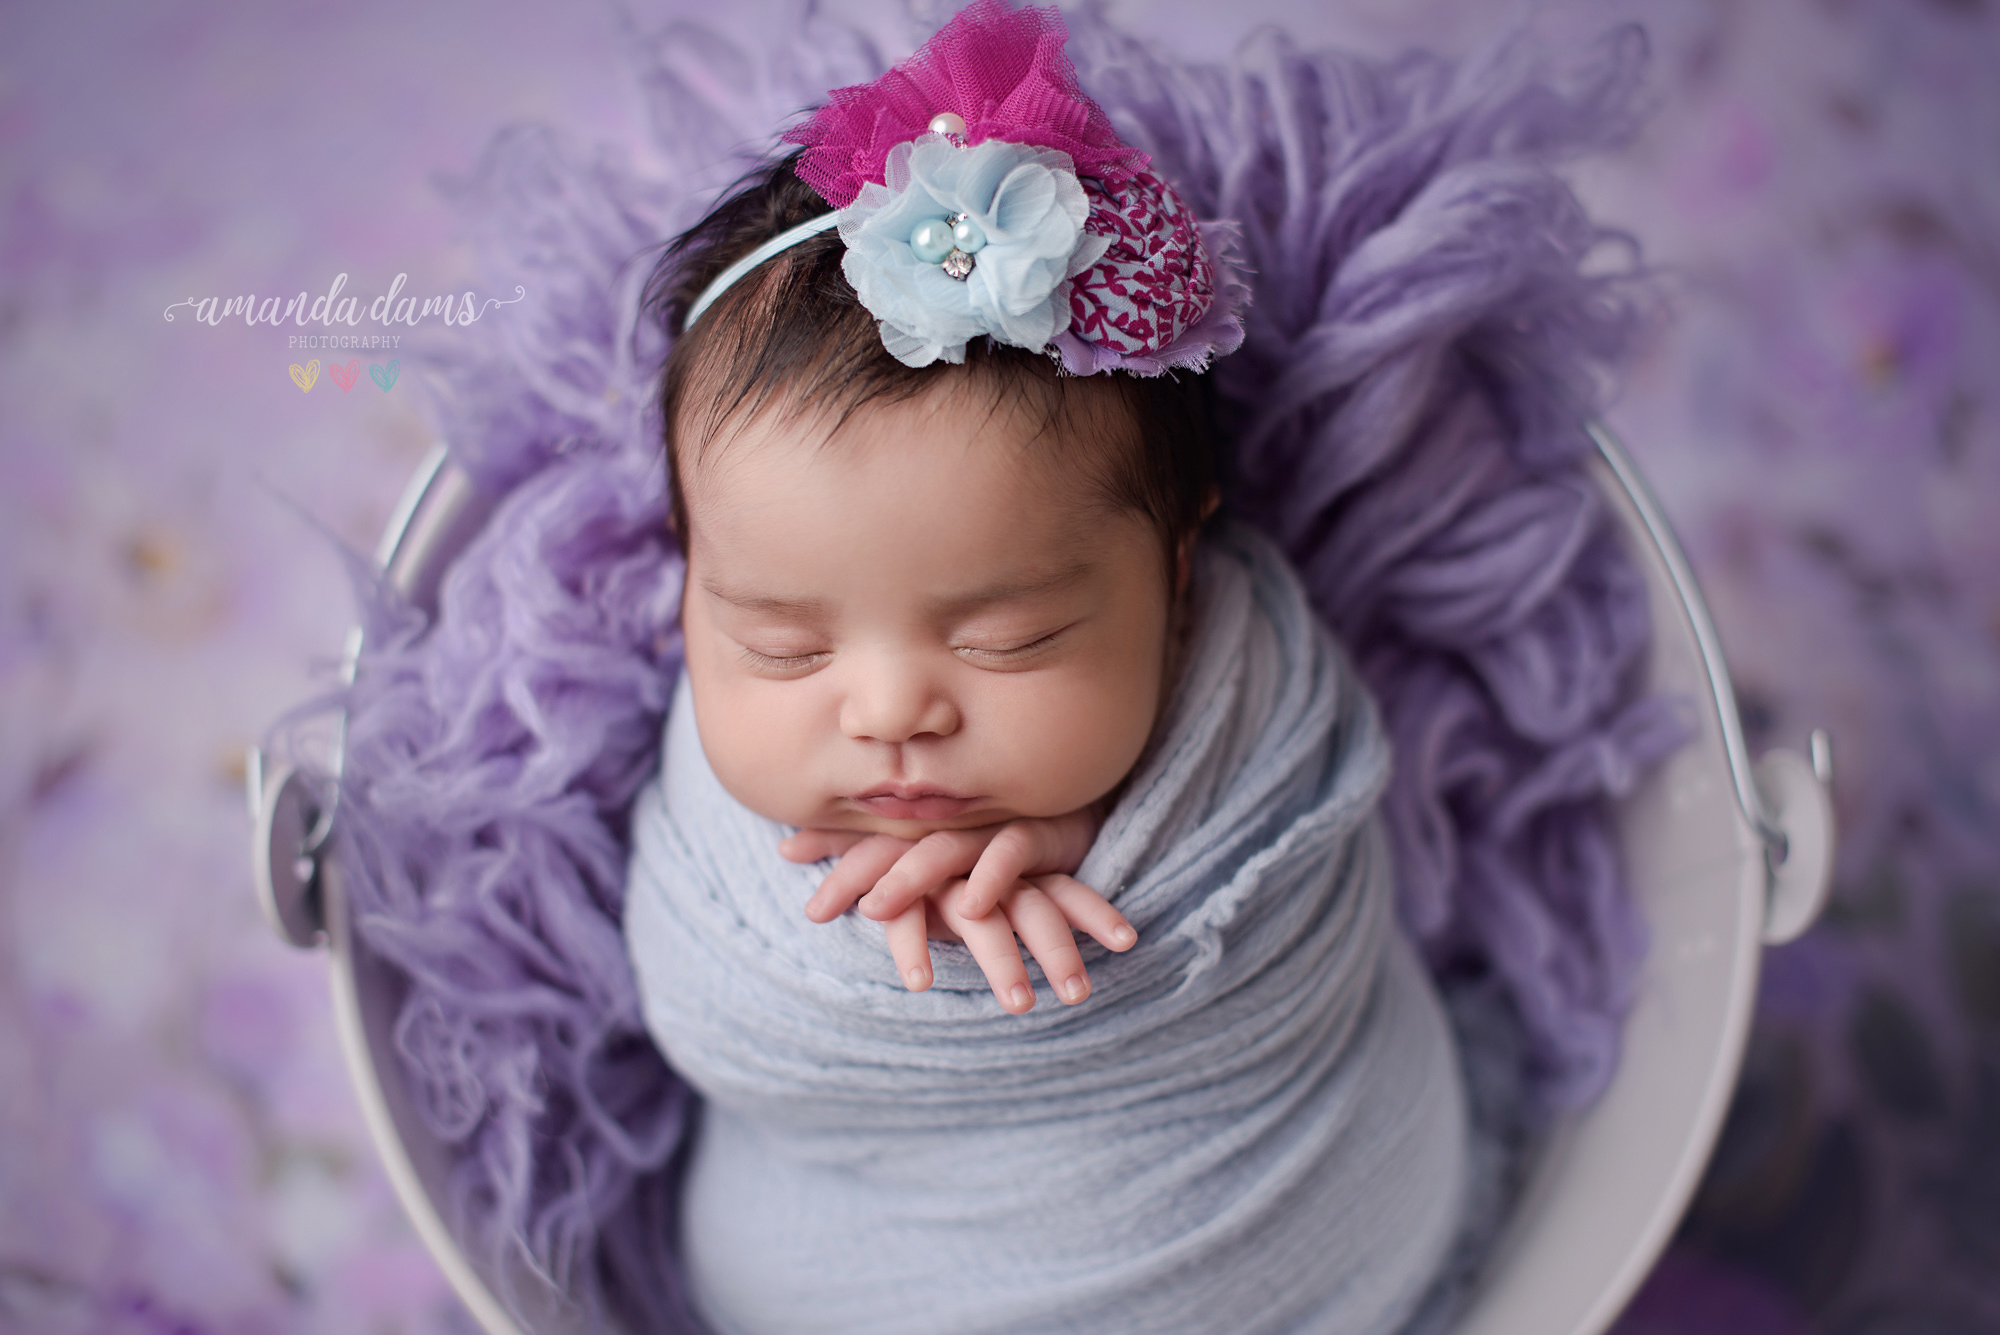 Newborn Photography Calgary Amanda Dams Photography Baby Amara Sleeping On Bucket